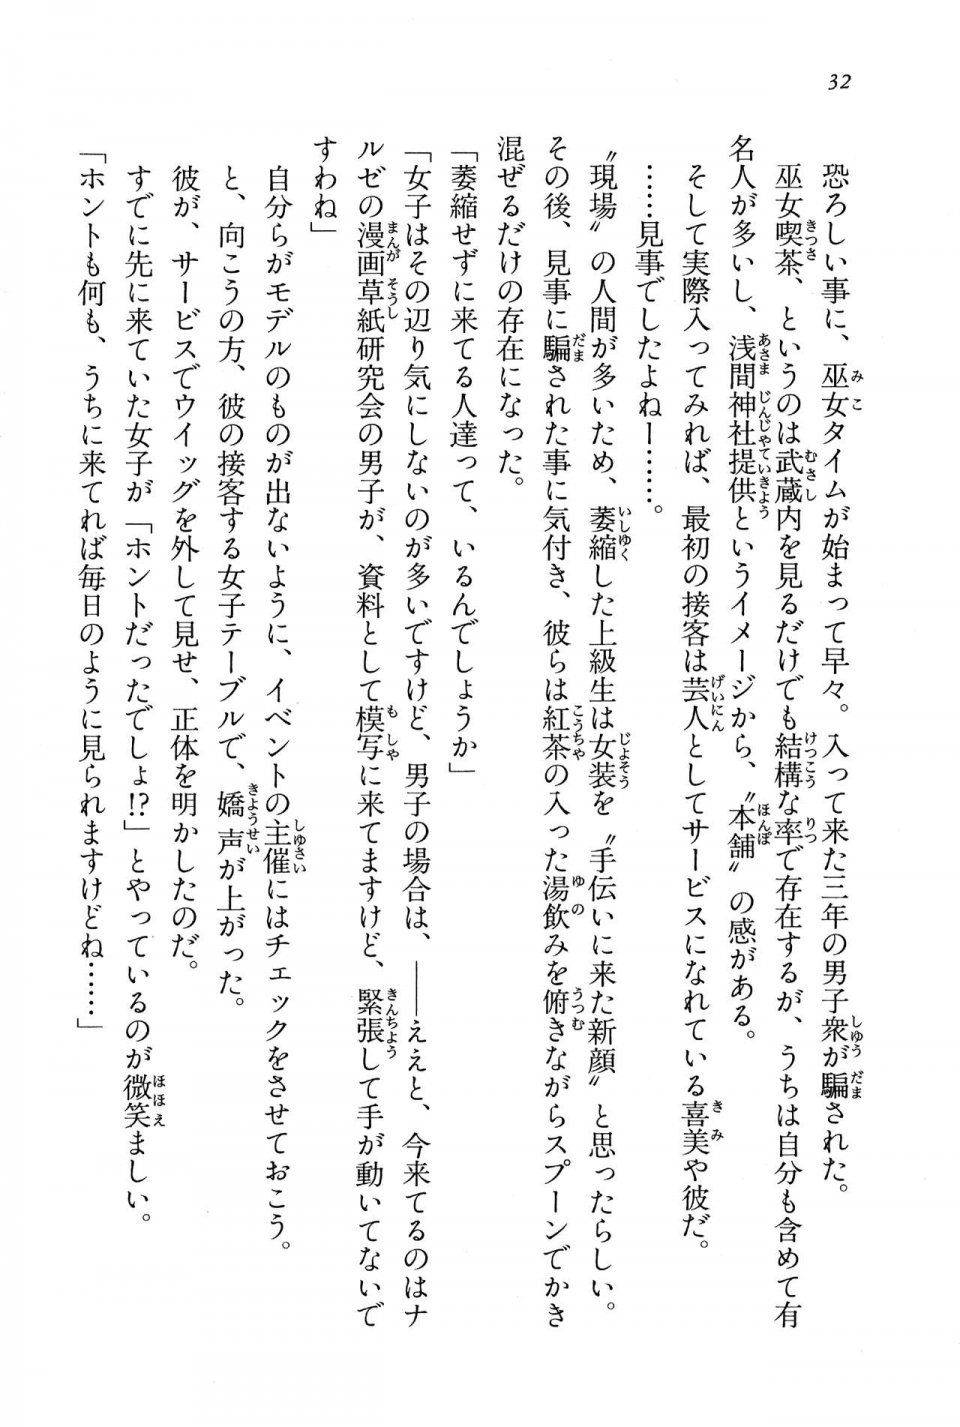 Kyoukai Senjou no Horizon BD Special Mininovel Vol 8(4B) - Photo #36